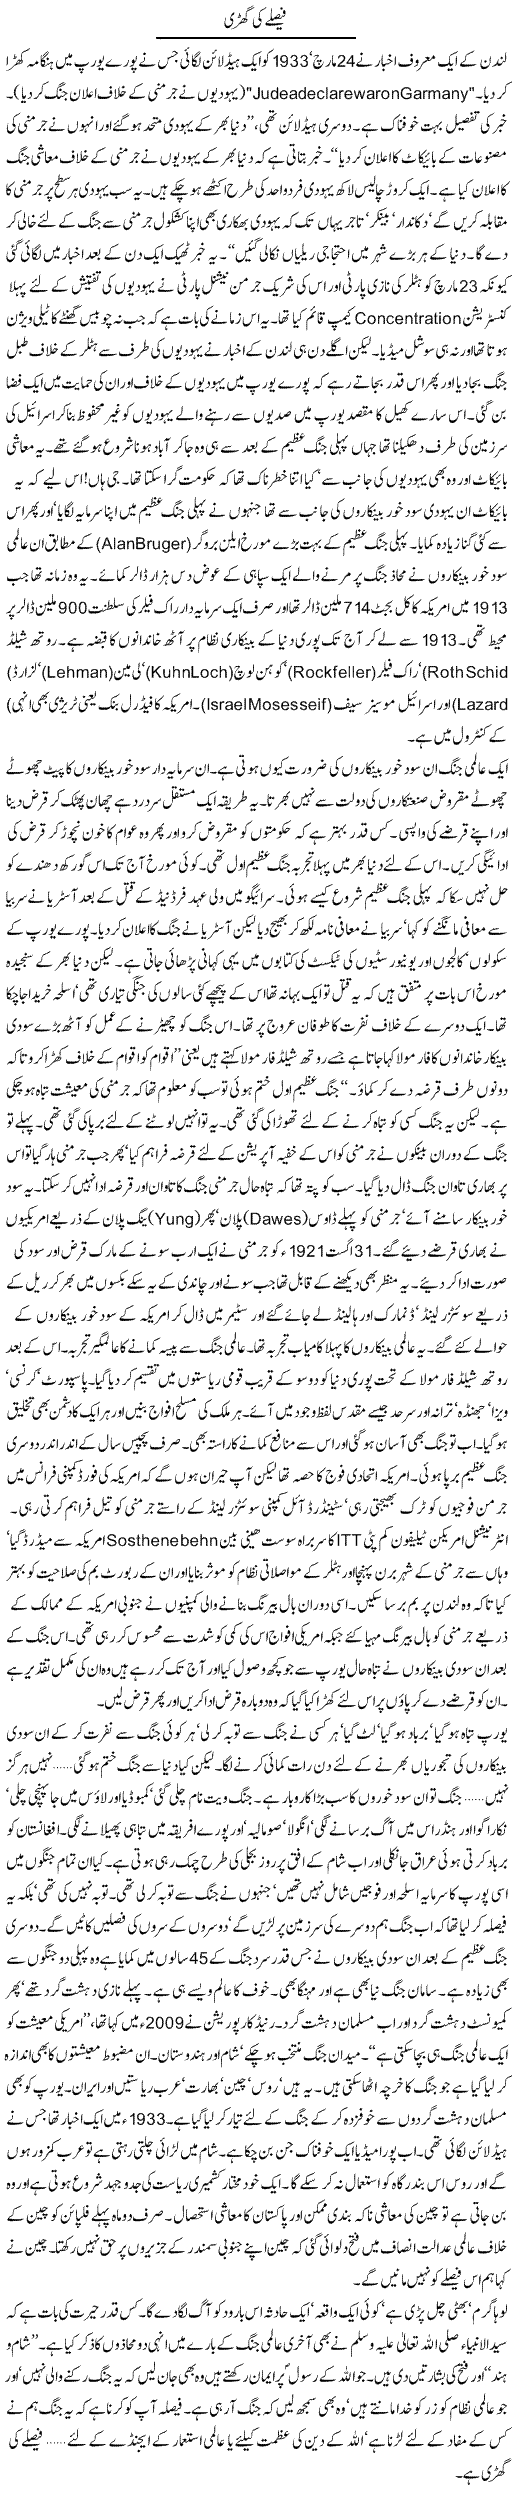 Faislay Ki Ghari | Orya Maqbool Jan | Daily Urdu Columns